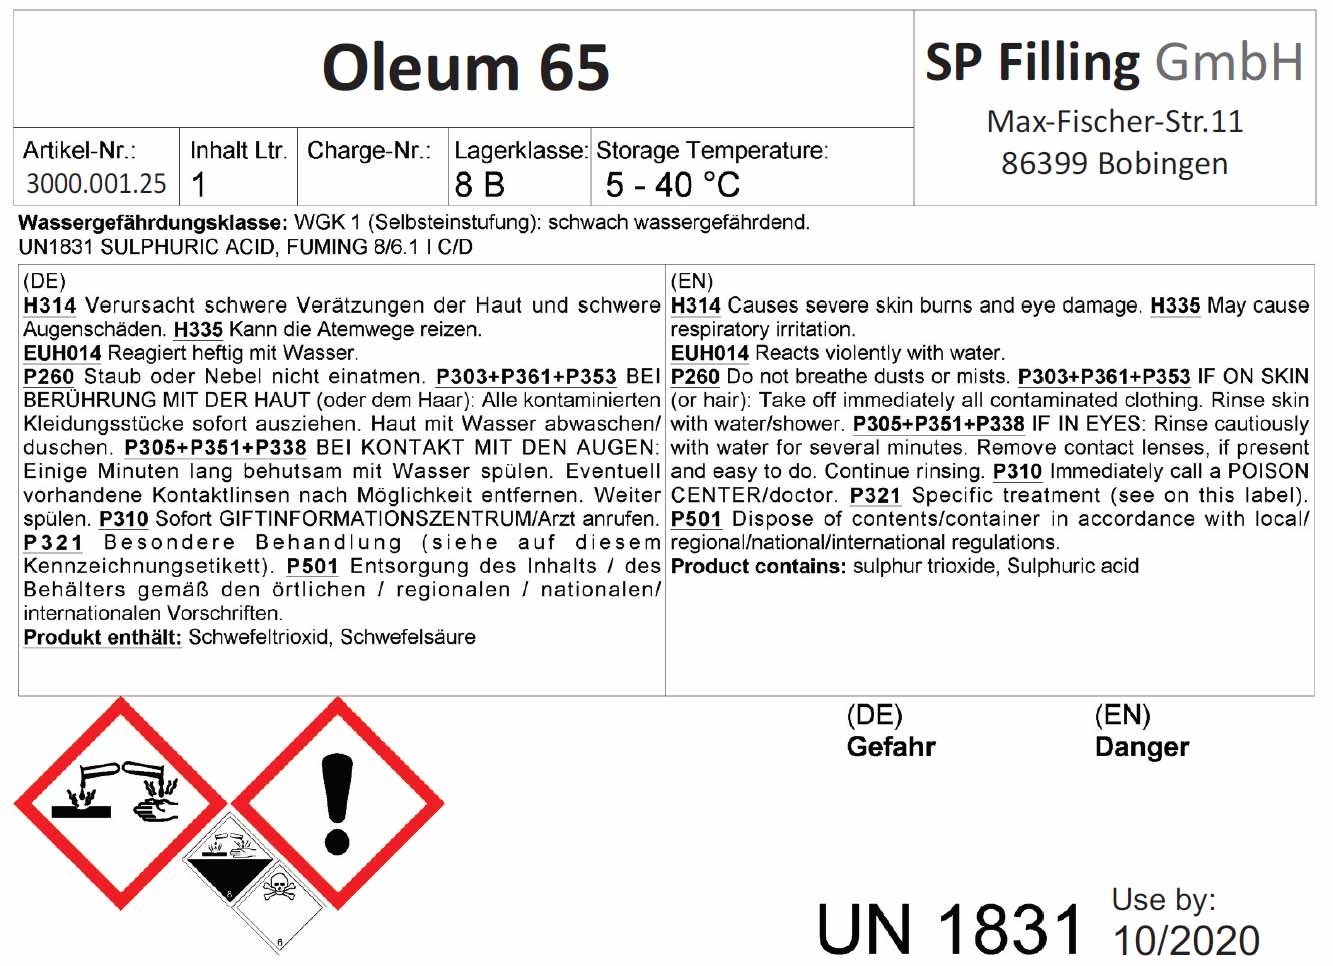 Oleum 65% - sulfuric acid fuming